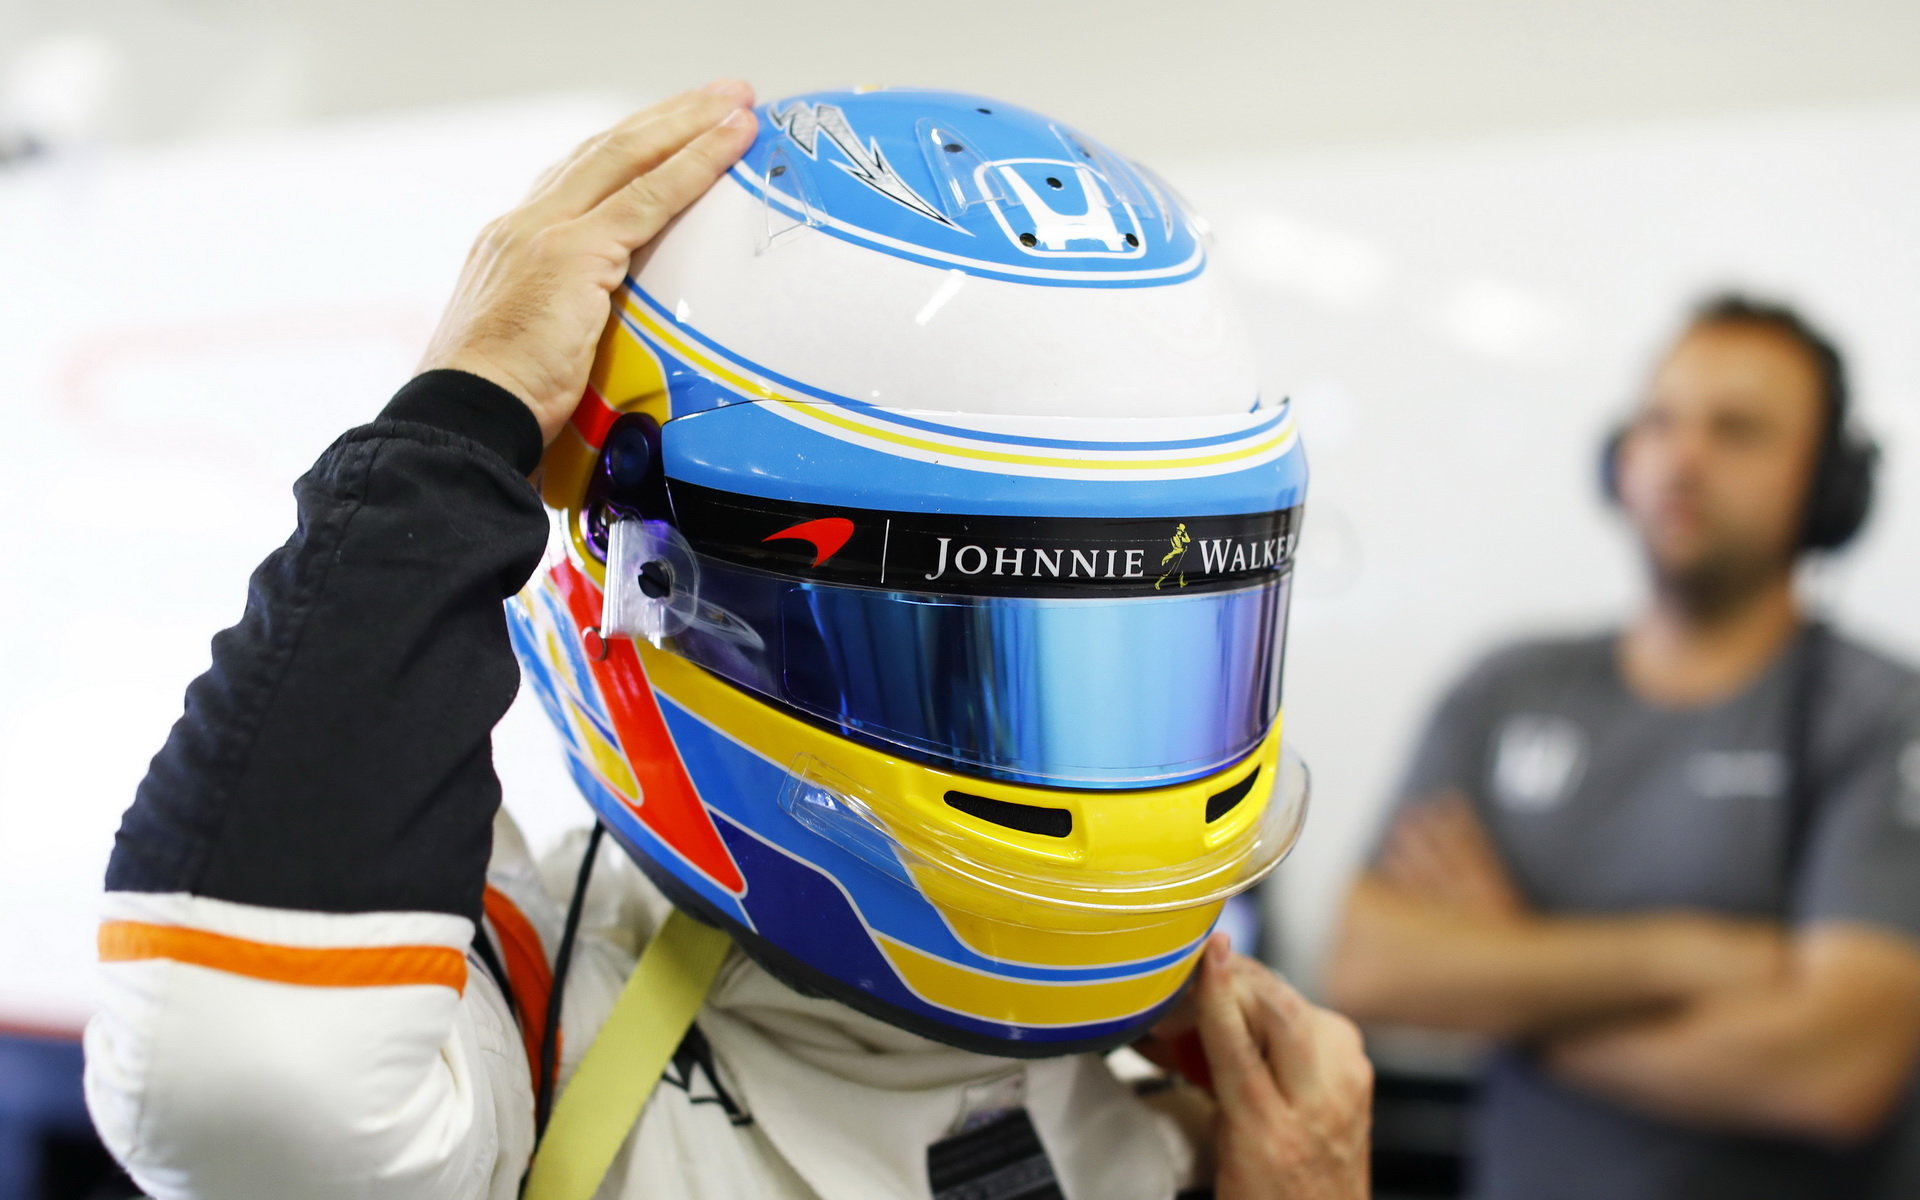 Fernando Alonso v závodě v Mexiku